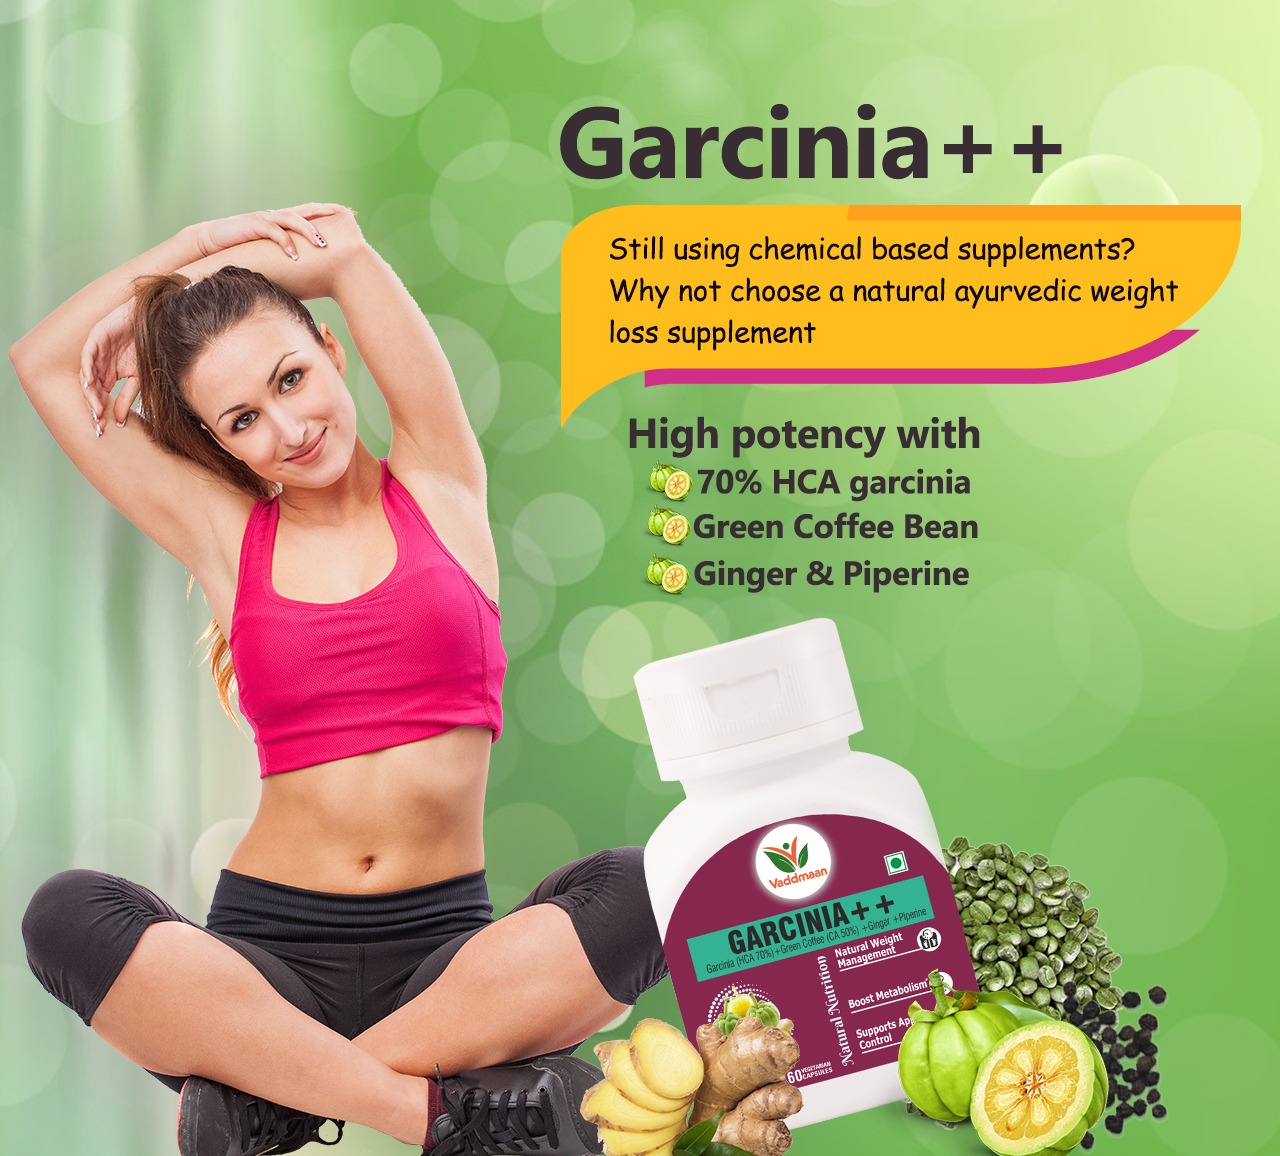 garcinia ++ weight loss supplements